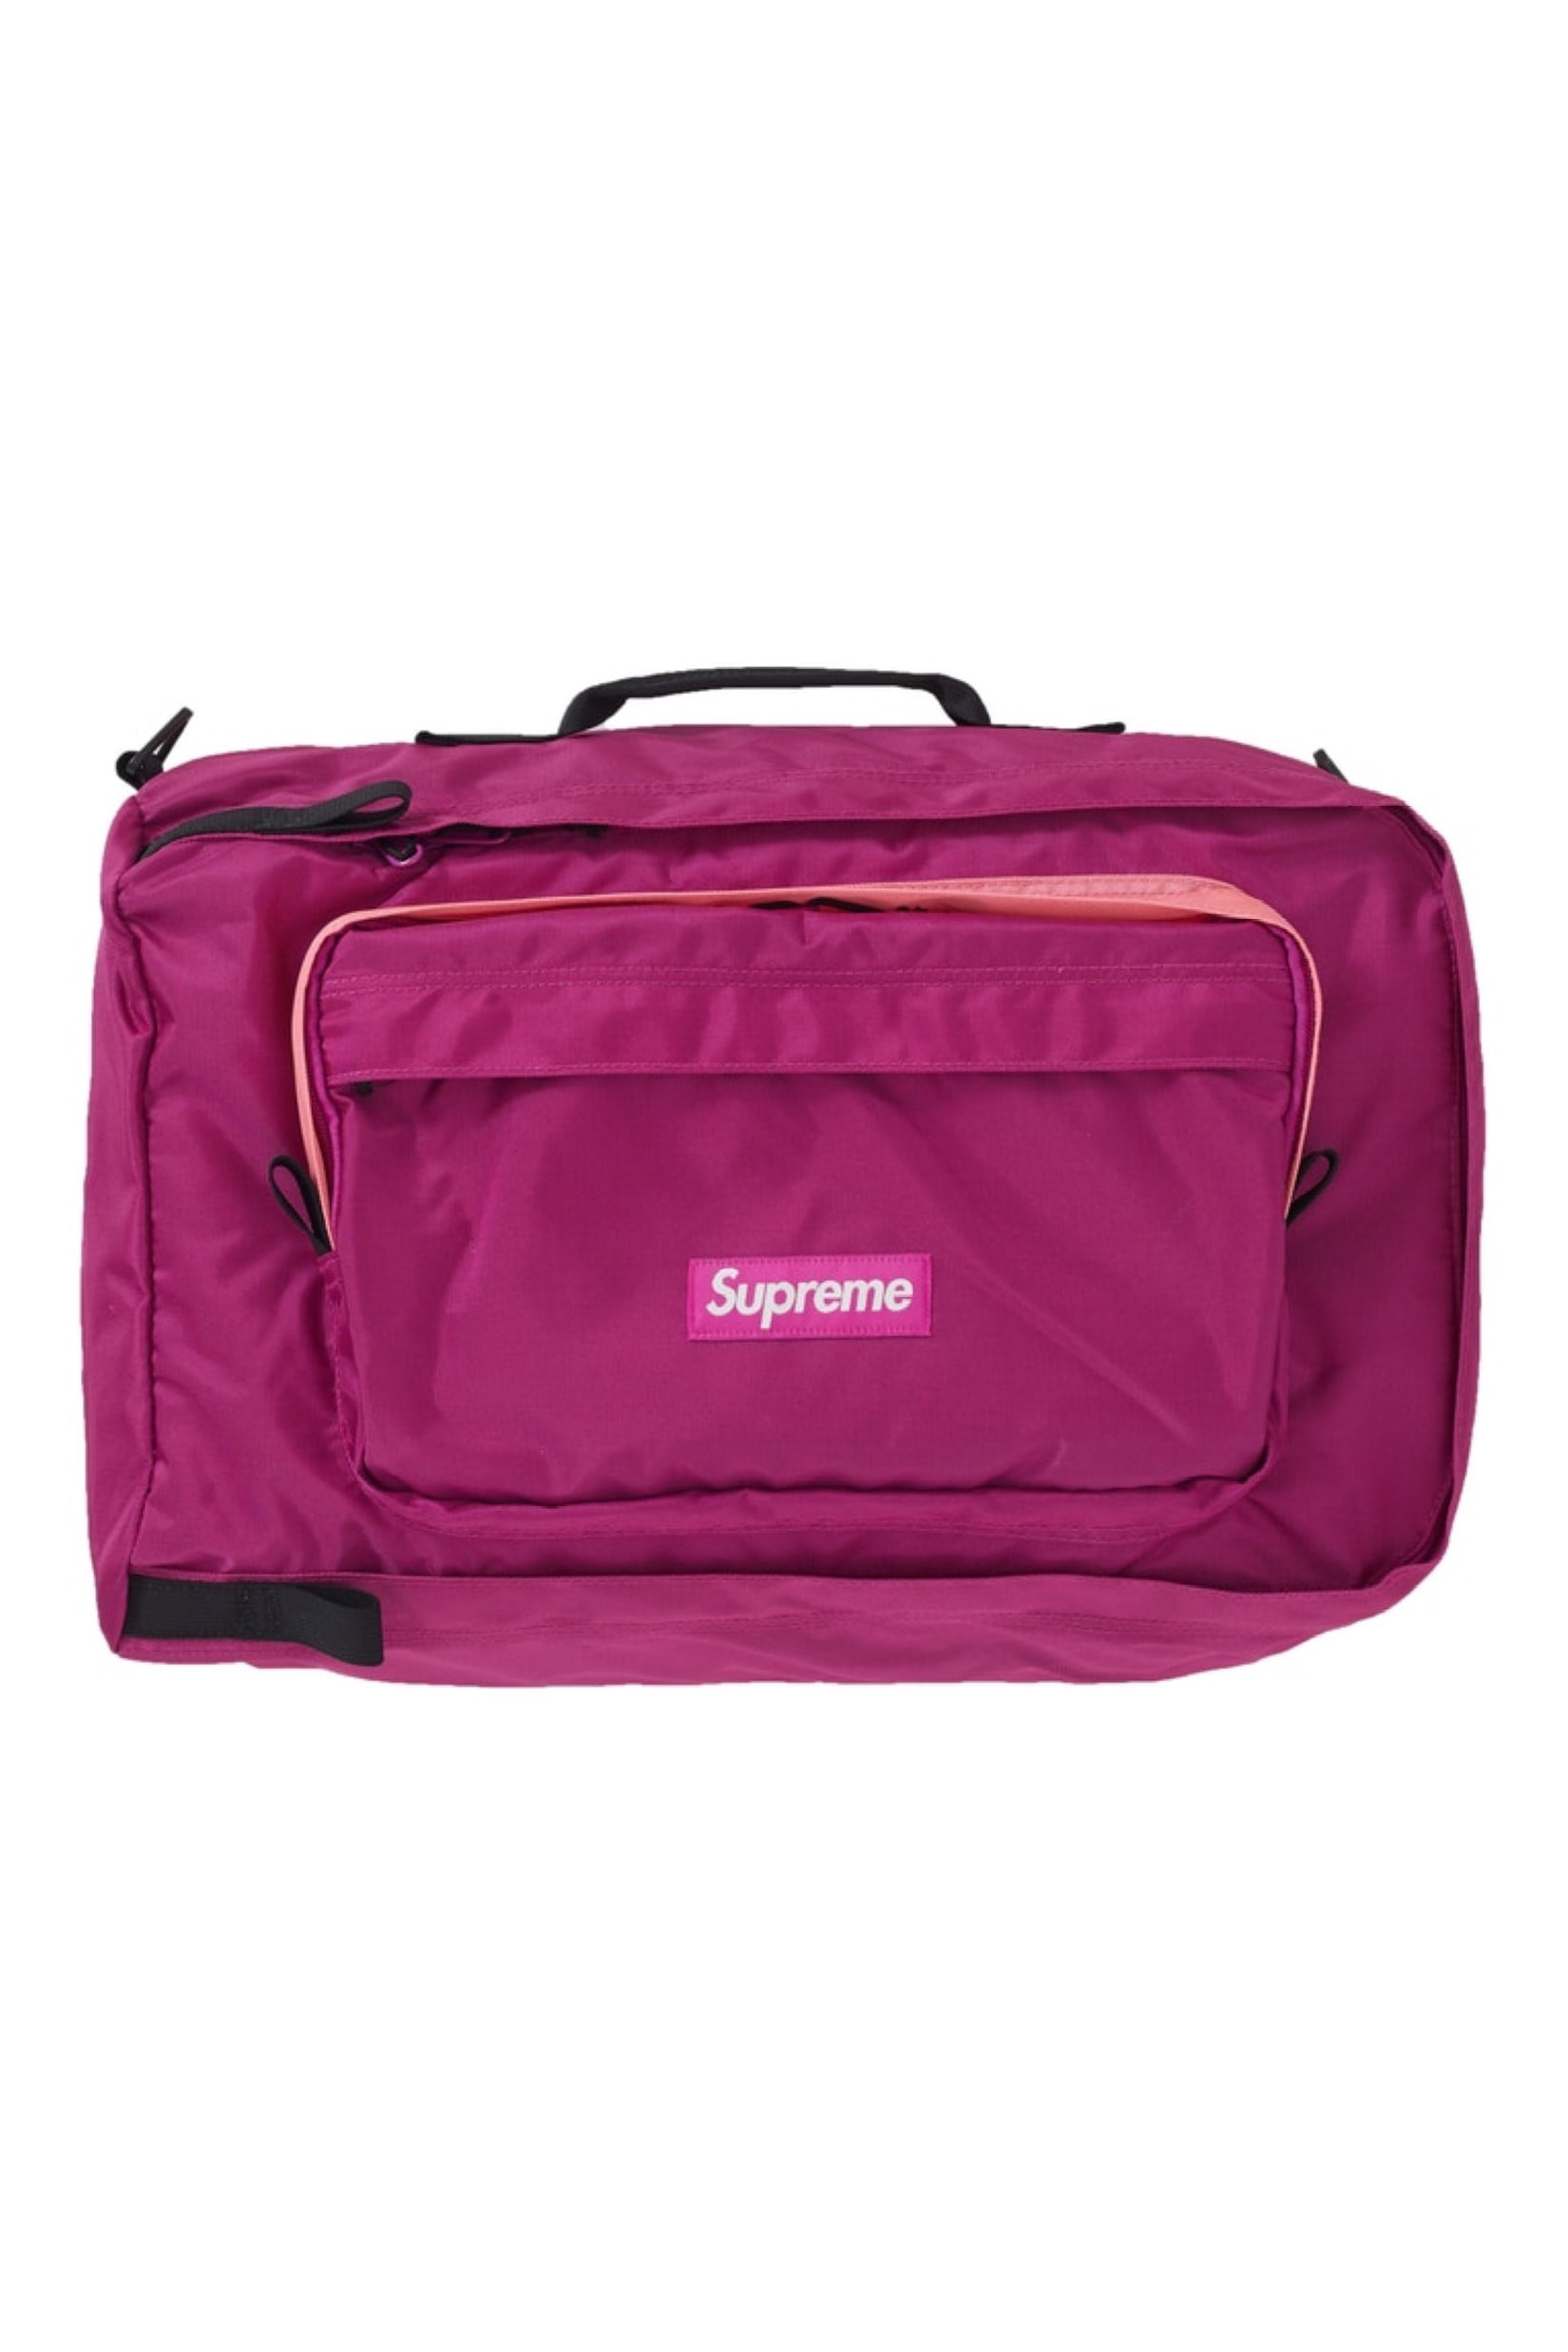 Supreme Duffle Bag (FW19) Magenta - www.neverfullbag.com - www.neverfullbag.com